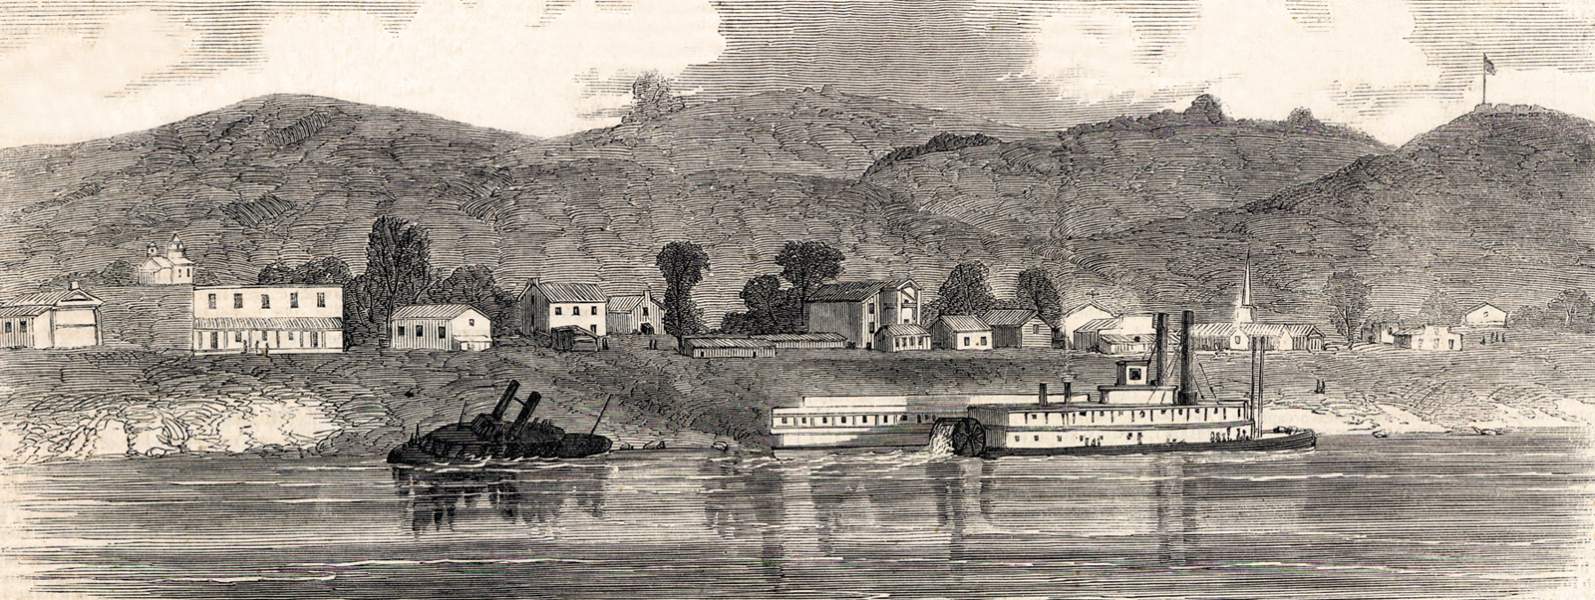 Helena, Arkansas, late 1863, artist's impression, zoomable image